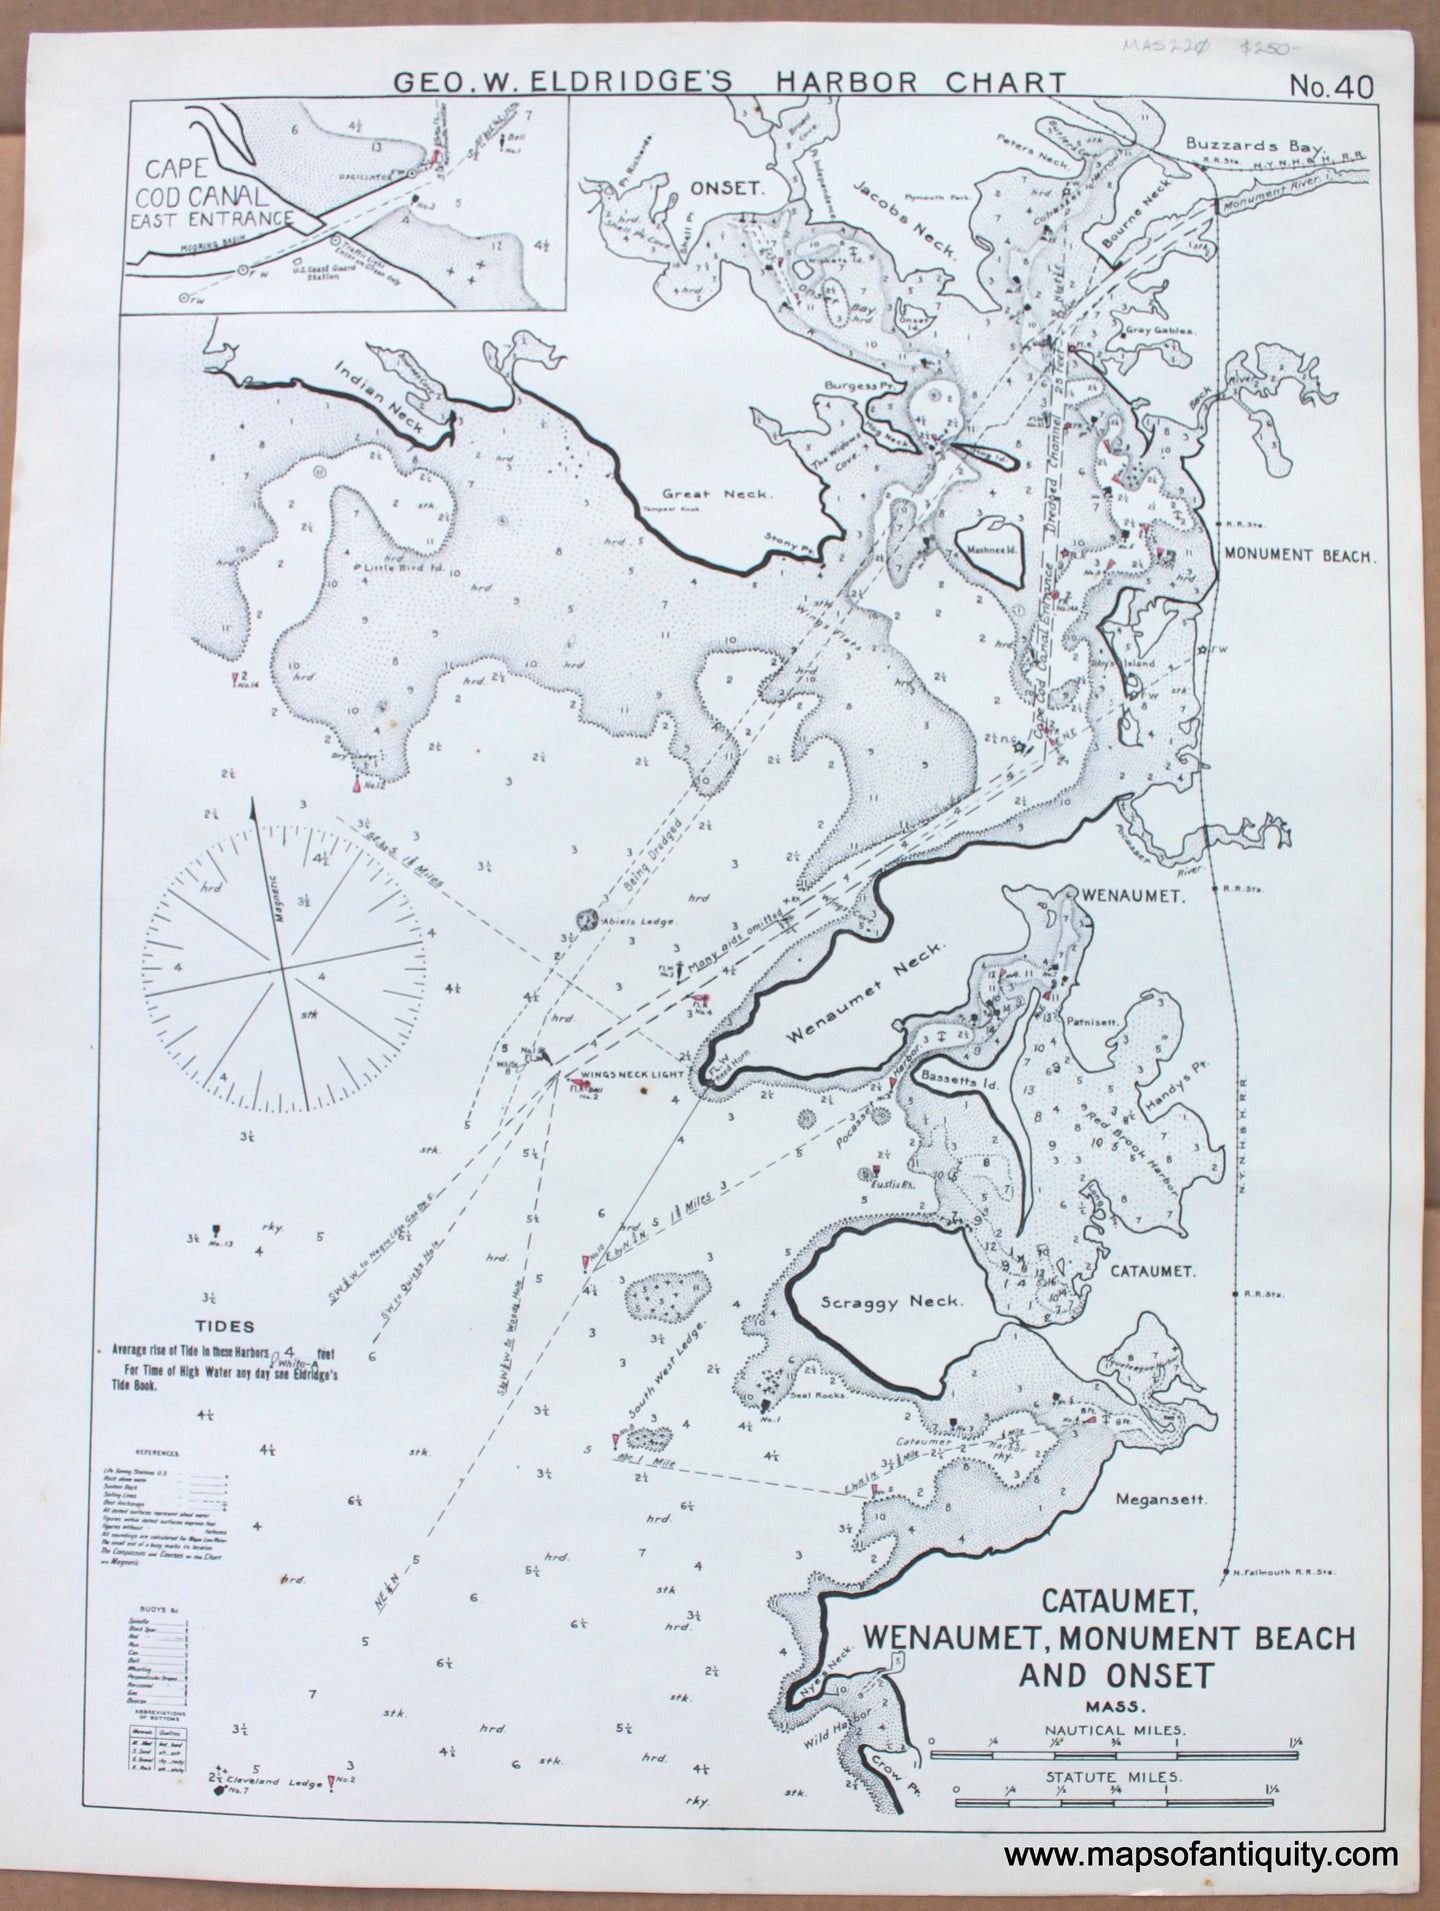 1915 - Cataumet, Wenaumet, Monument Beach and Onset Mass. - Antique Chart